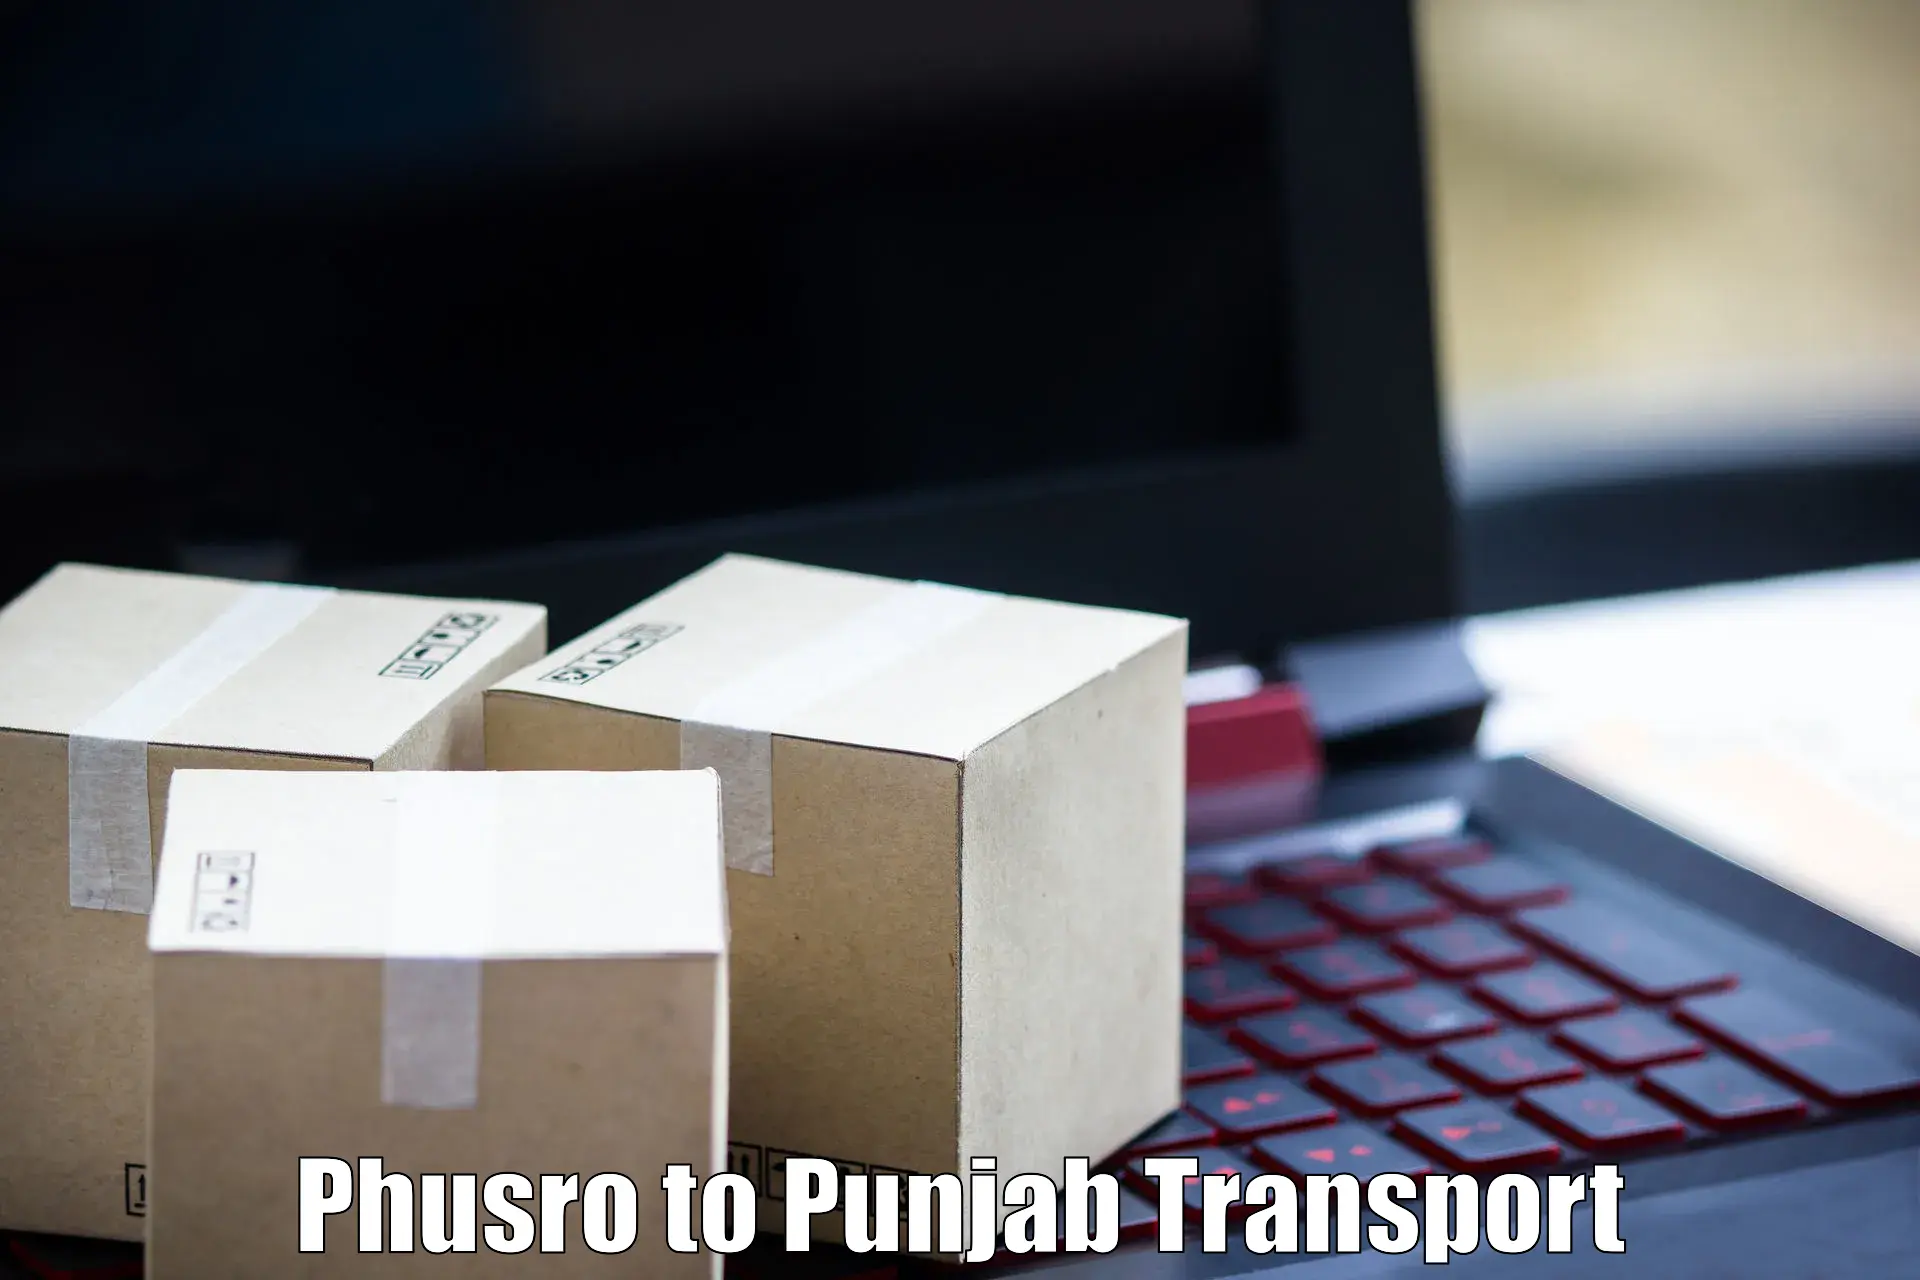 Transport in sharing Phusro to Central University of Punjab Bathinda